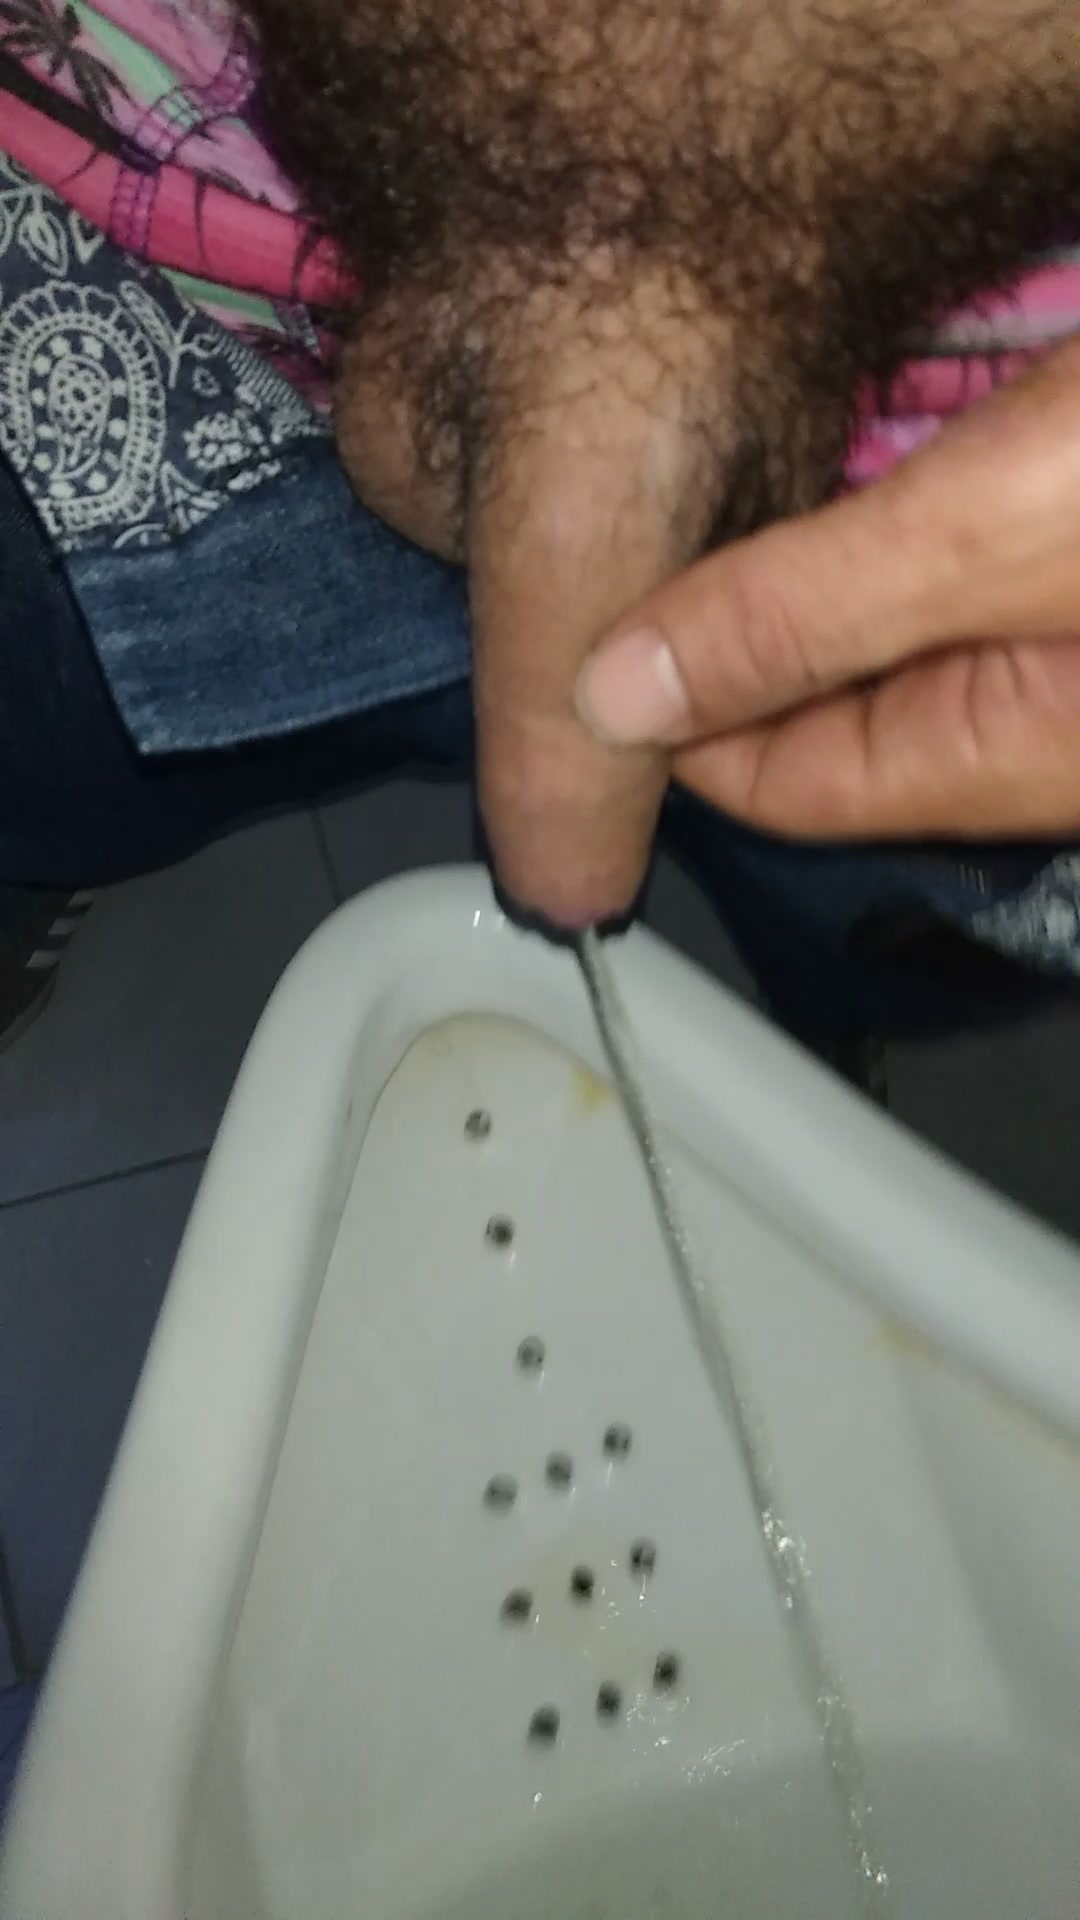 Pissing in public restroom